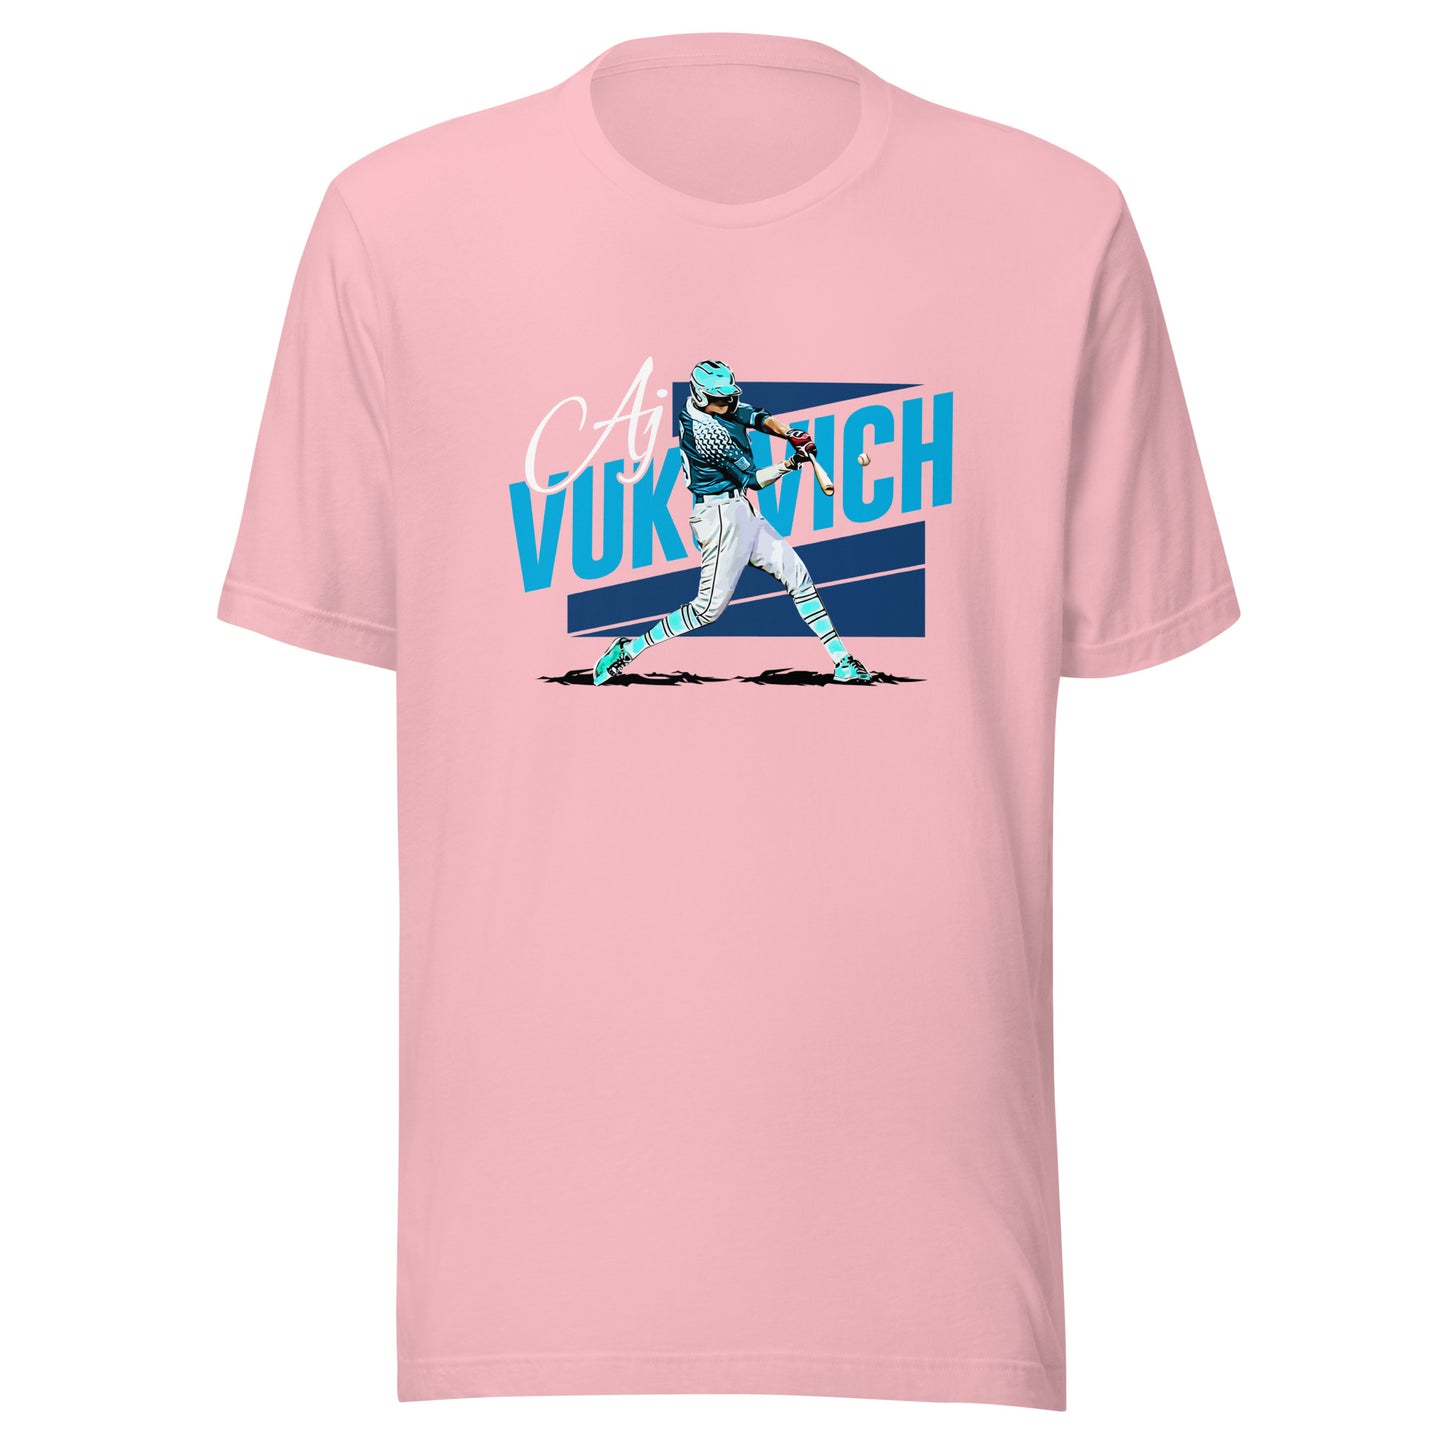 AJ Vukovich "Icon" t-shirt - Fan Arch